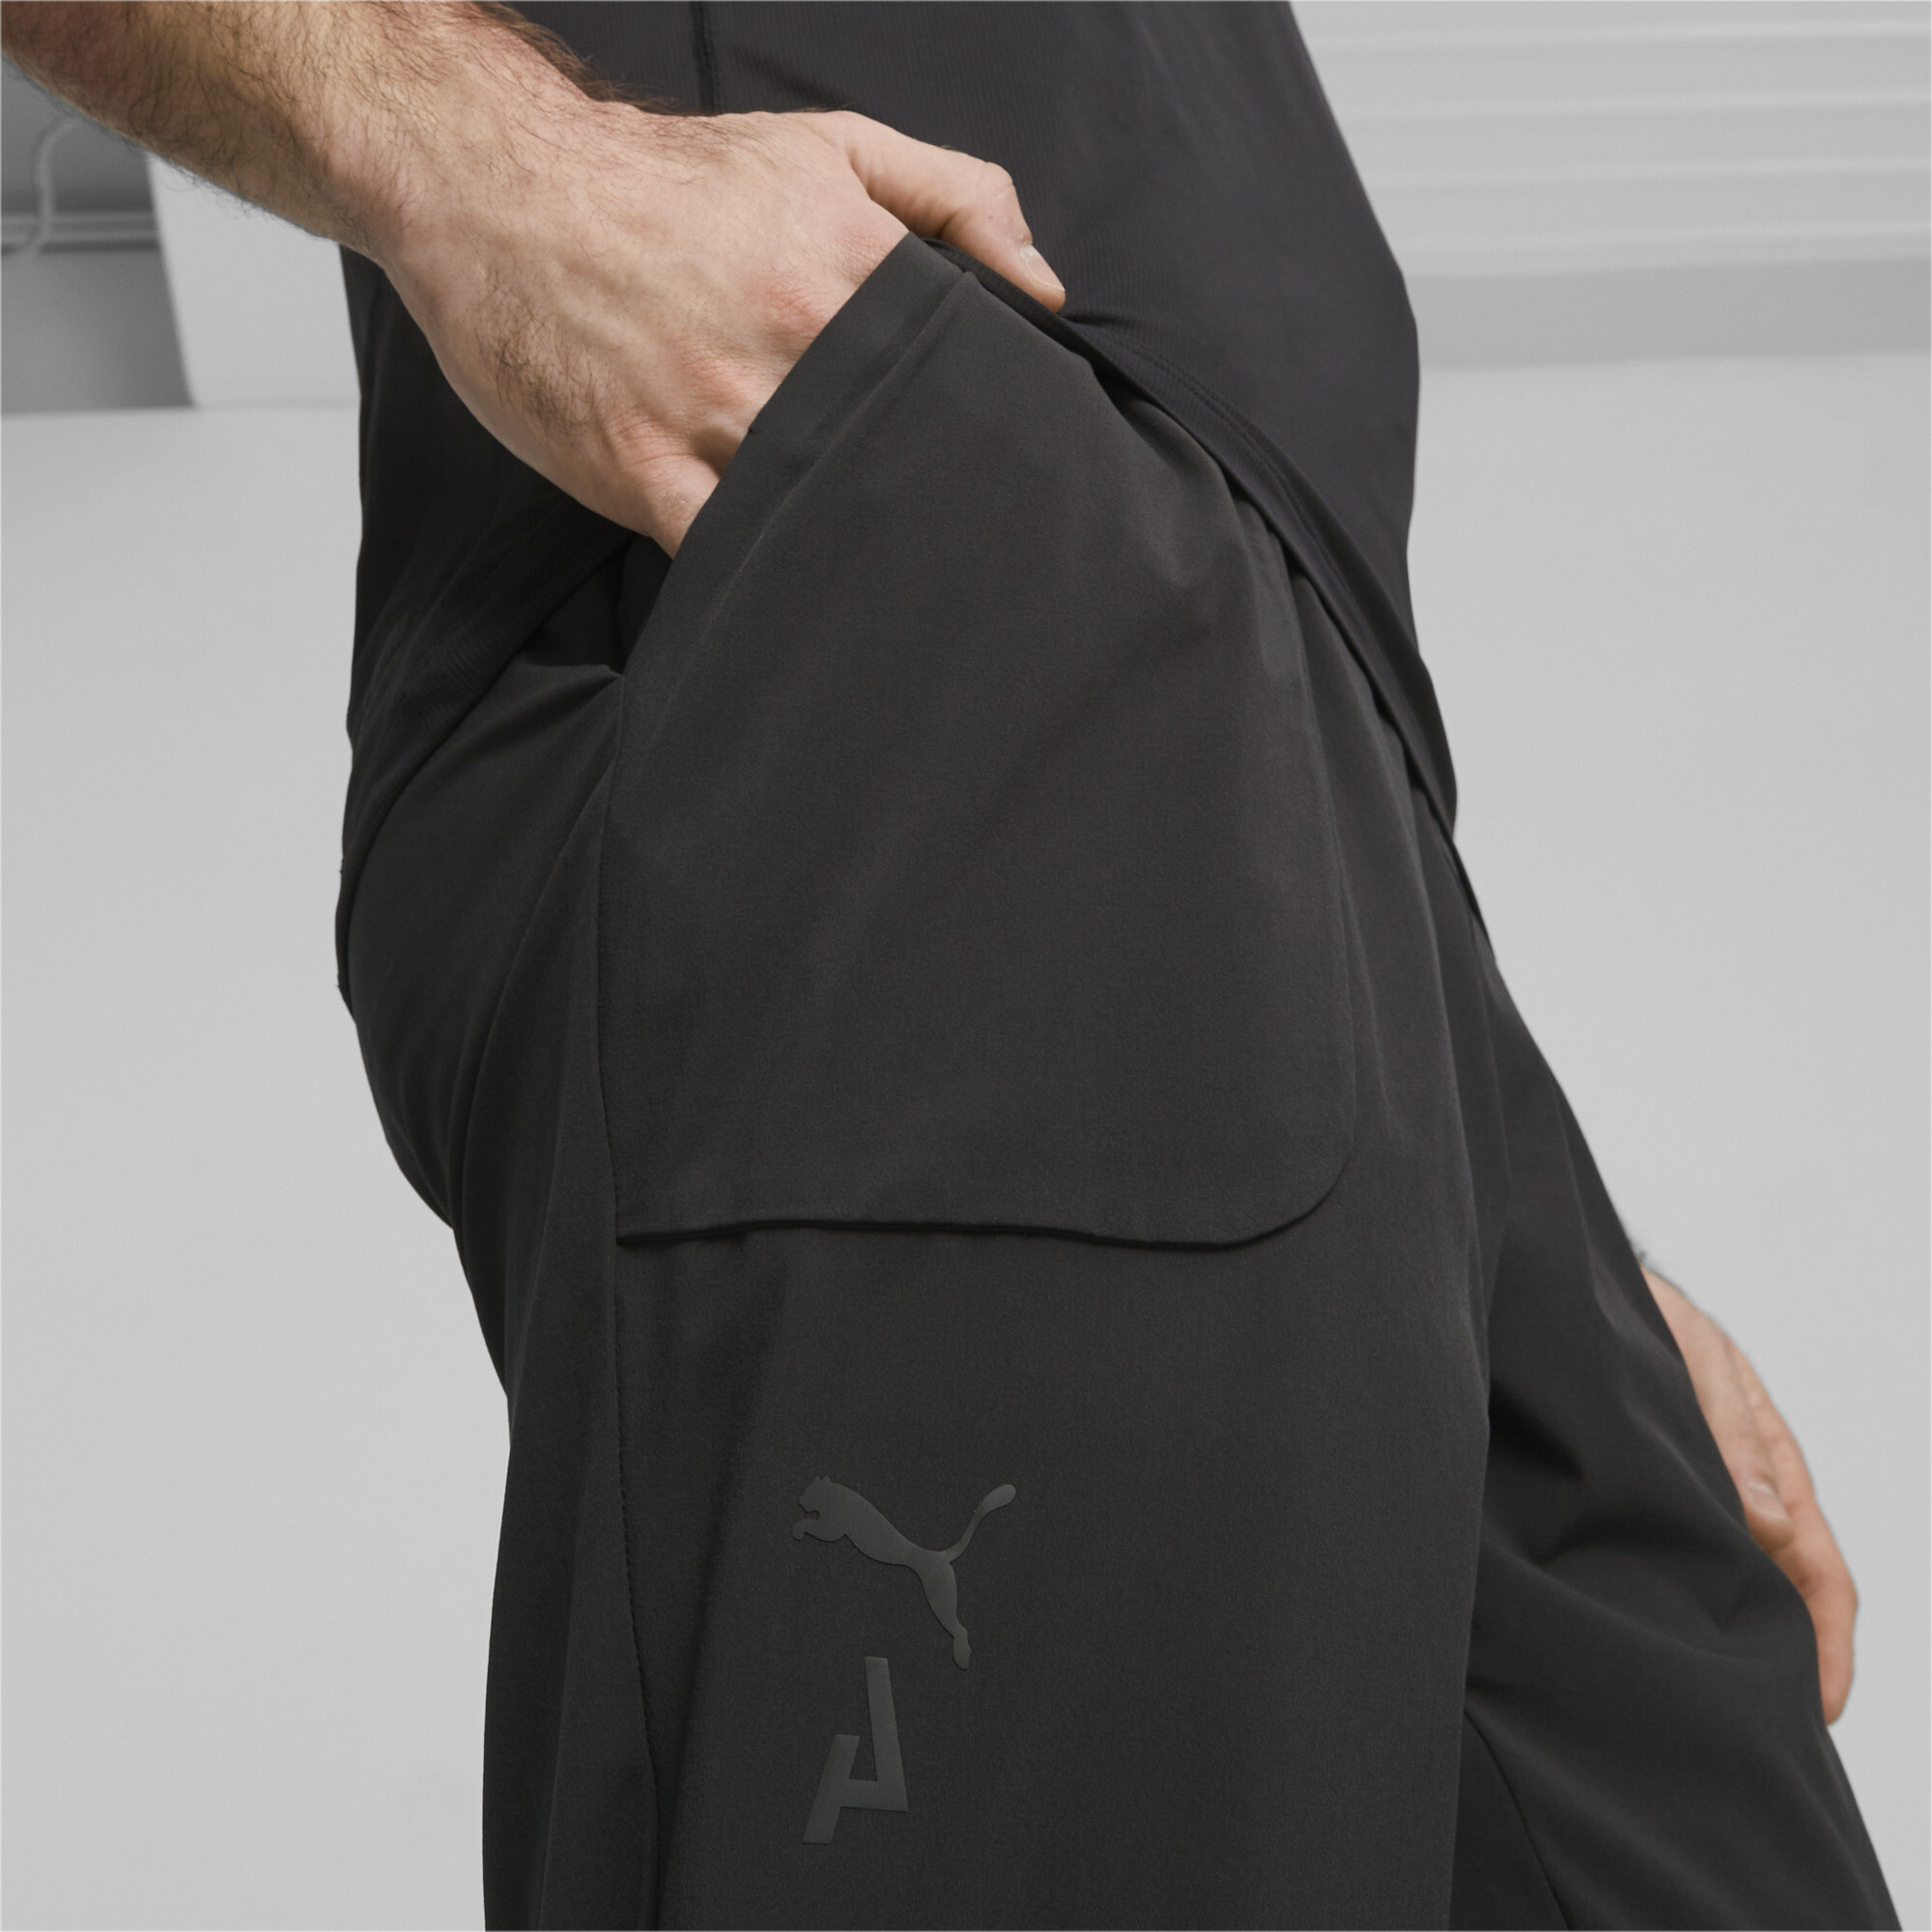 Men's PUMA SEASONS Lightweight Trail Running Pants In Black, Size Small